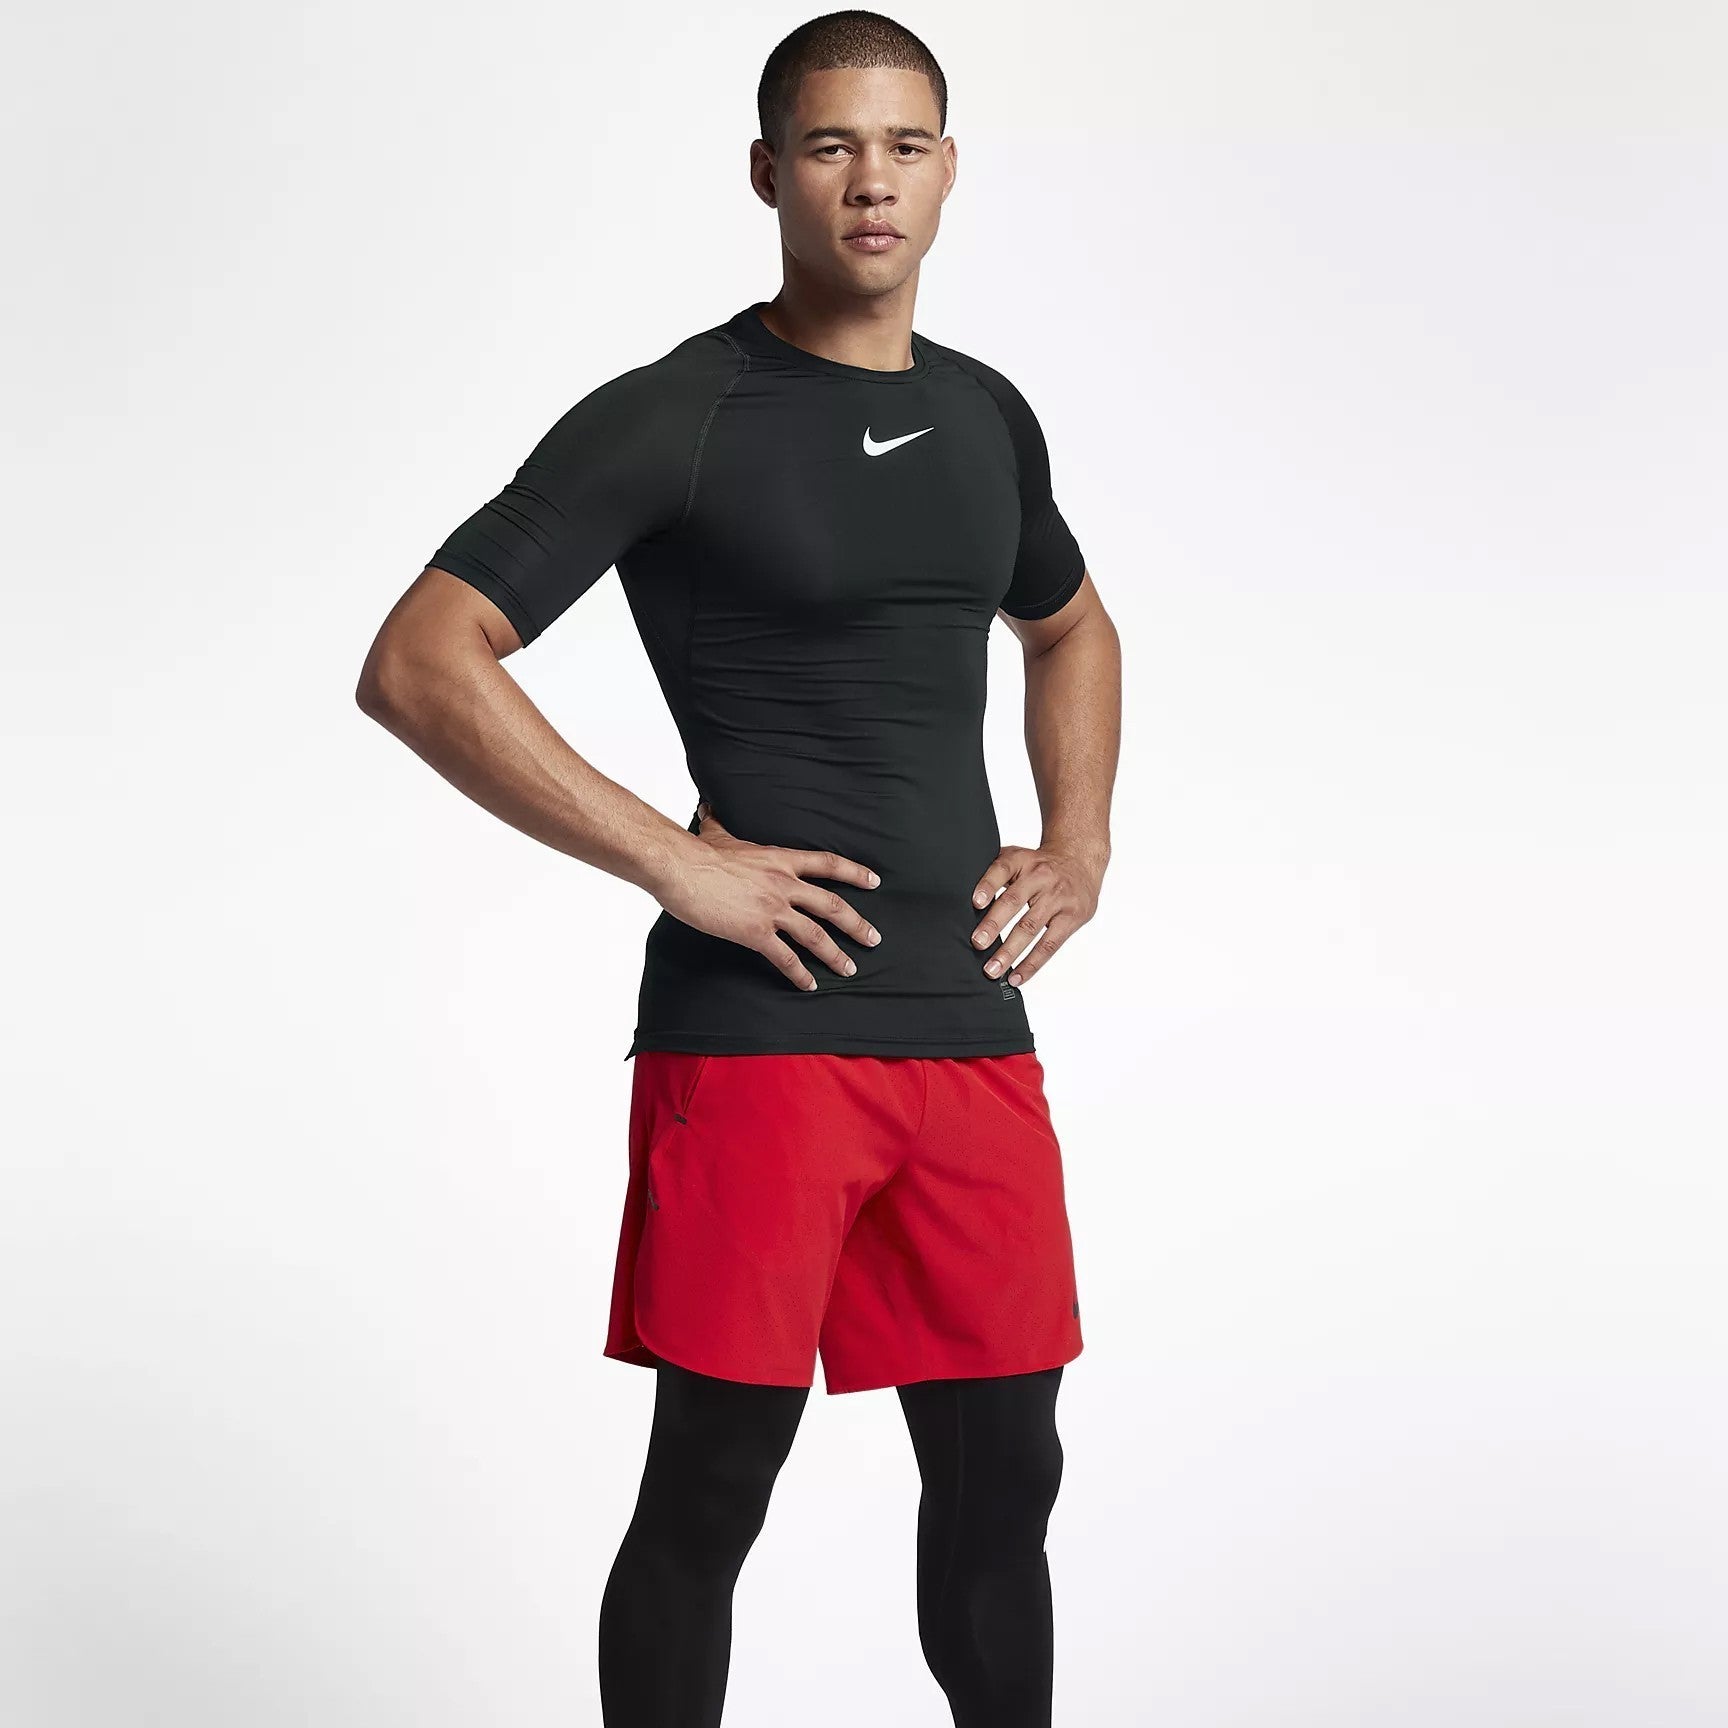 Men's Nike Pro Sleeve Training Top -